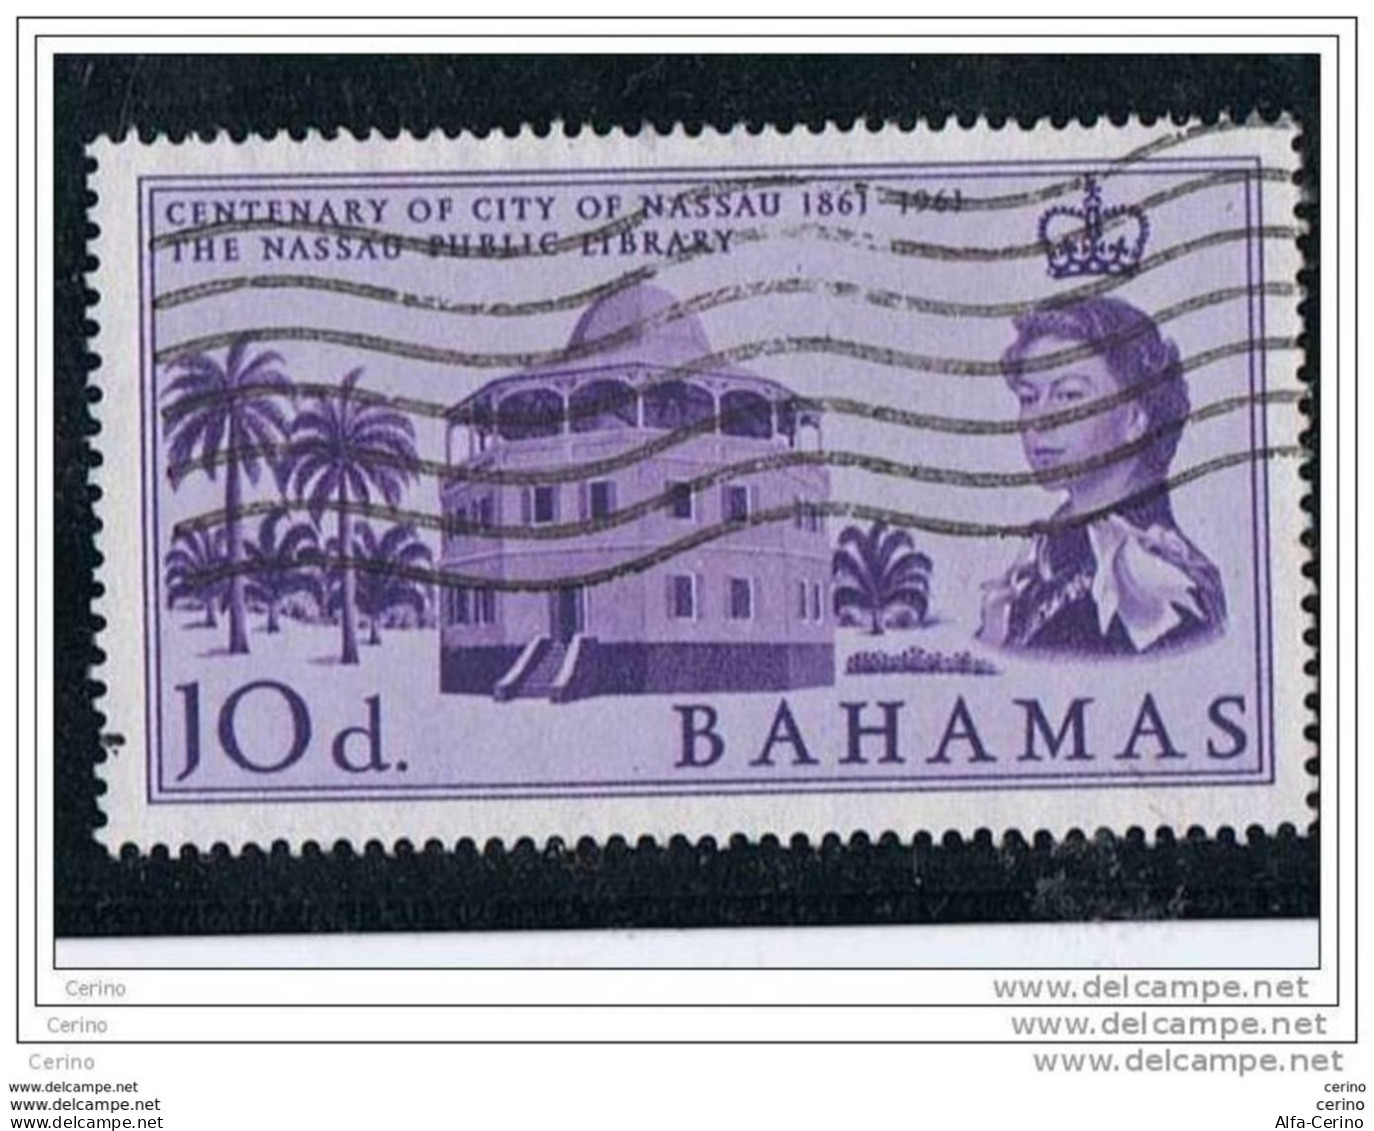 BAHAMAS:  1962  CENTENARY  NASSAU  CITY  -  10 P. USED  STAMP  -  YV/TELL. 168 - 1859-1963 Colonia Británica